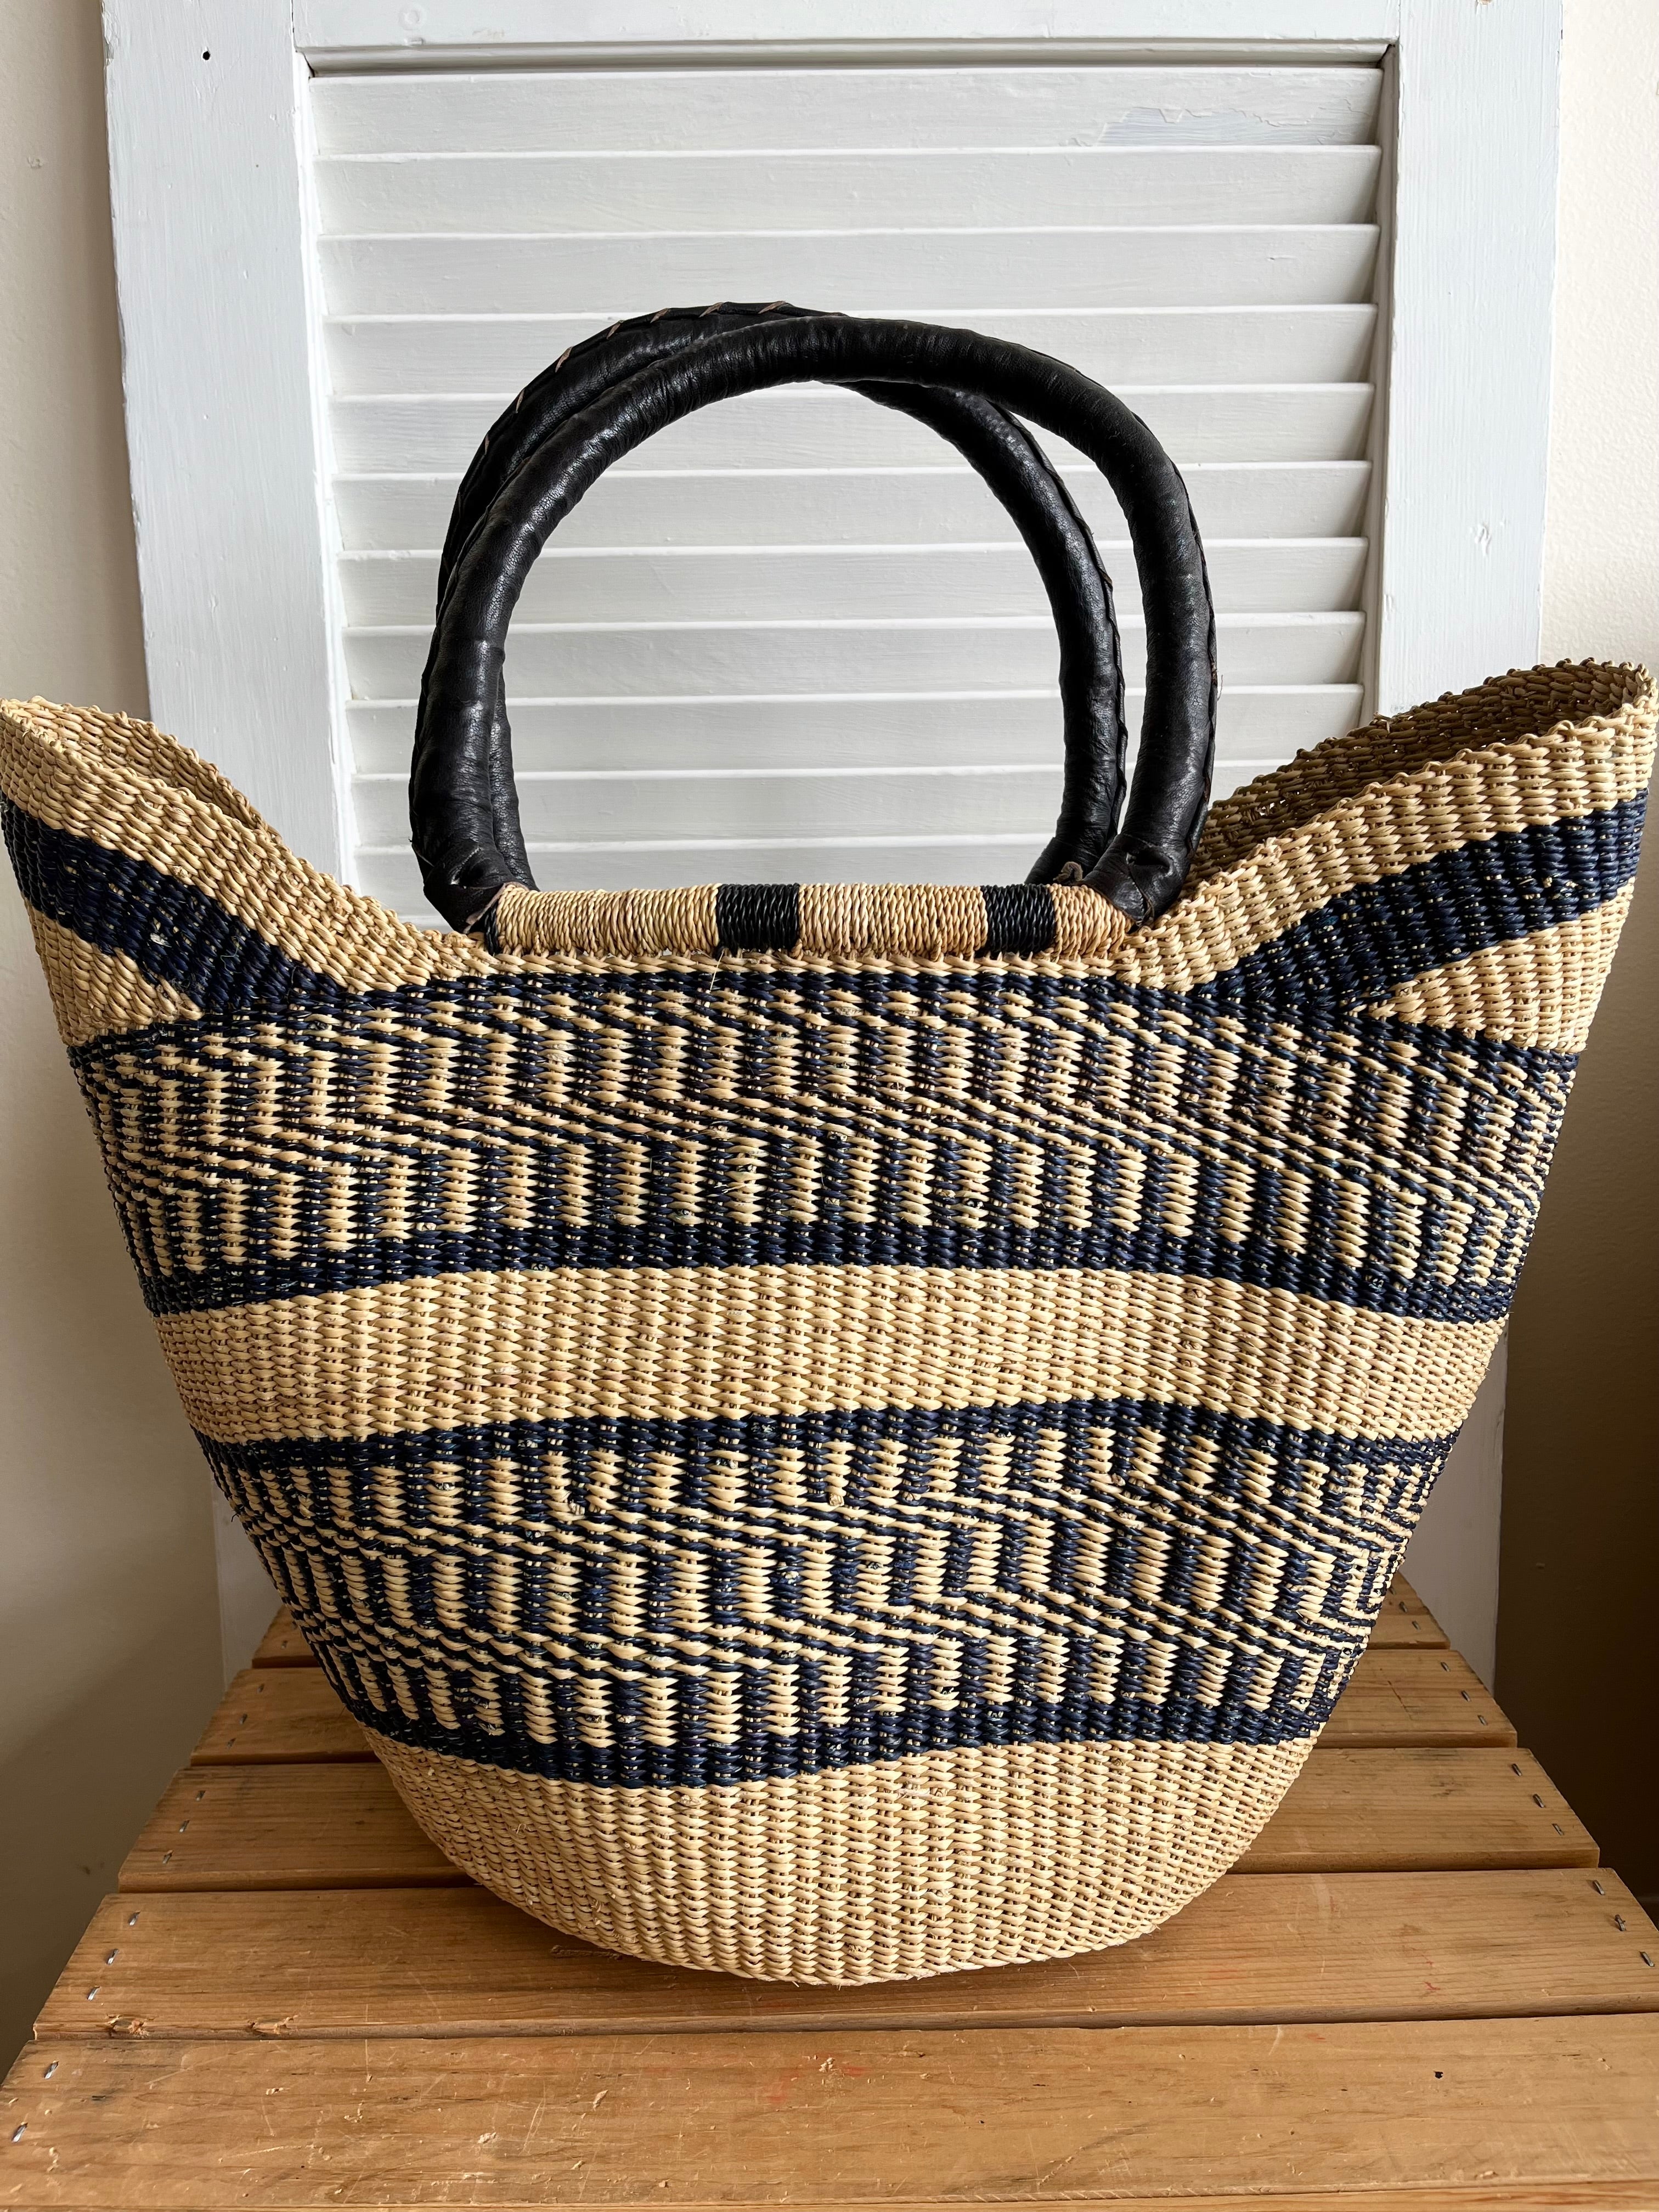 U-Shopper basket with handles